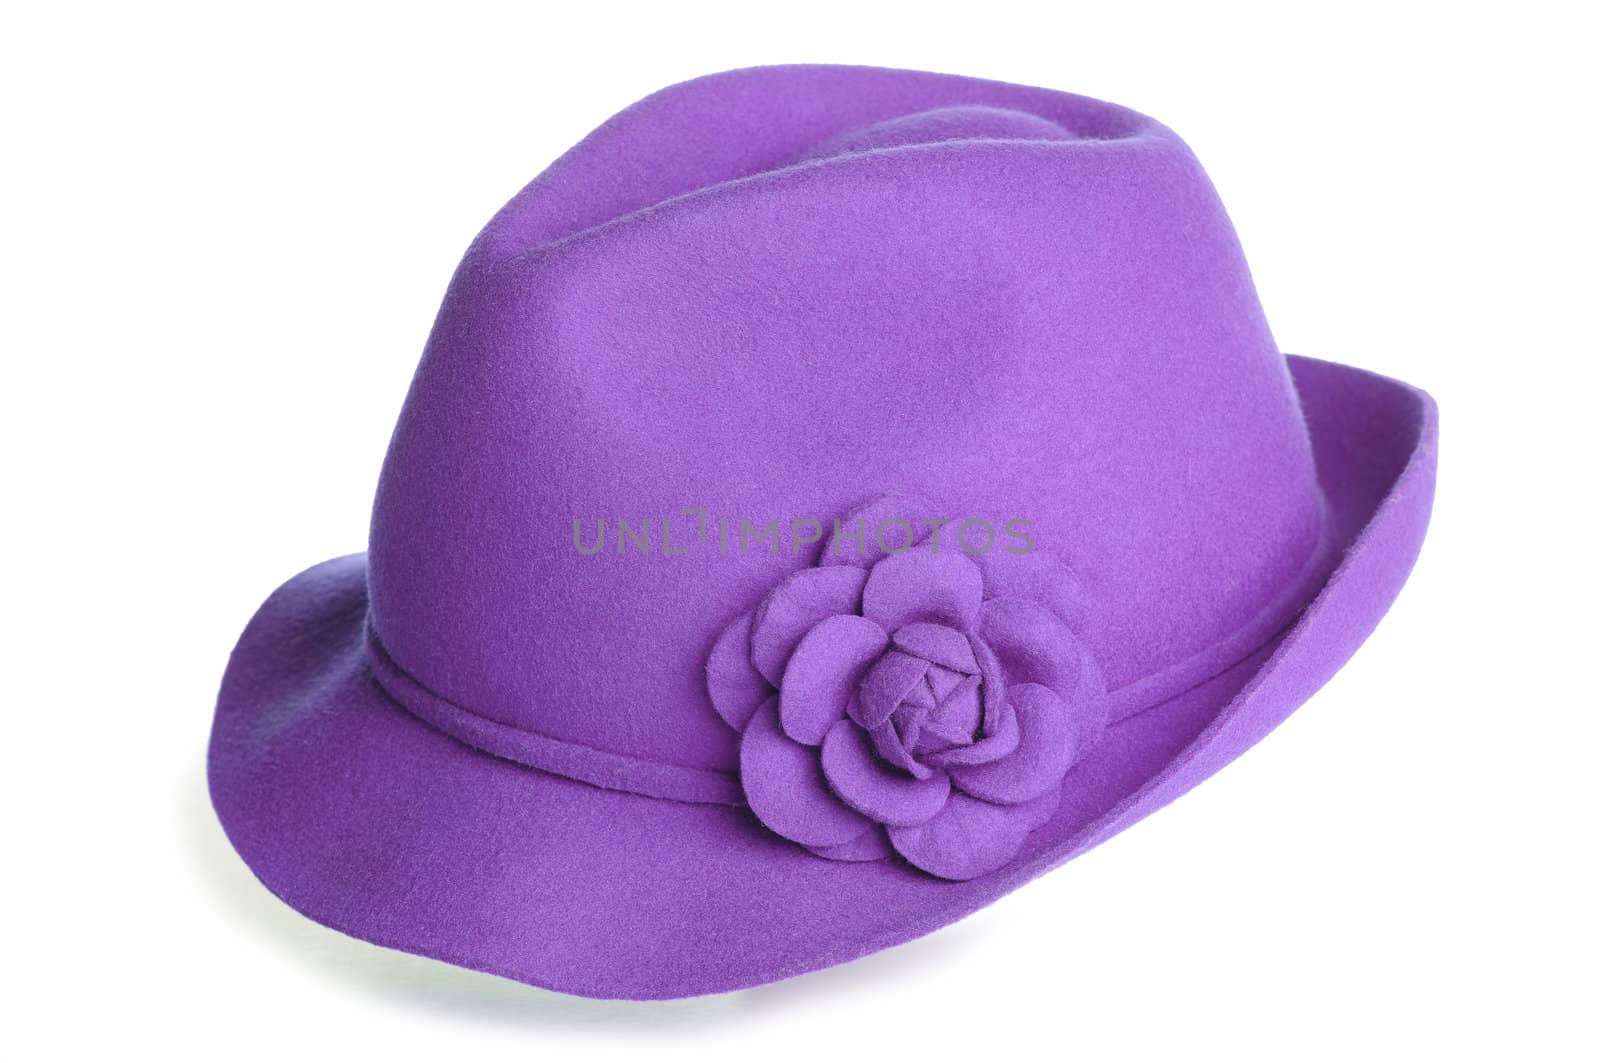 a purple felt hat with a flower on it.